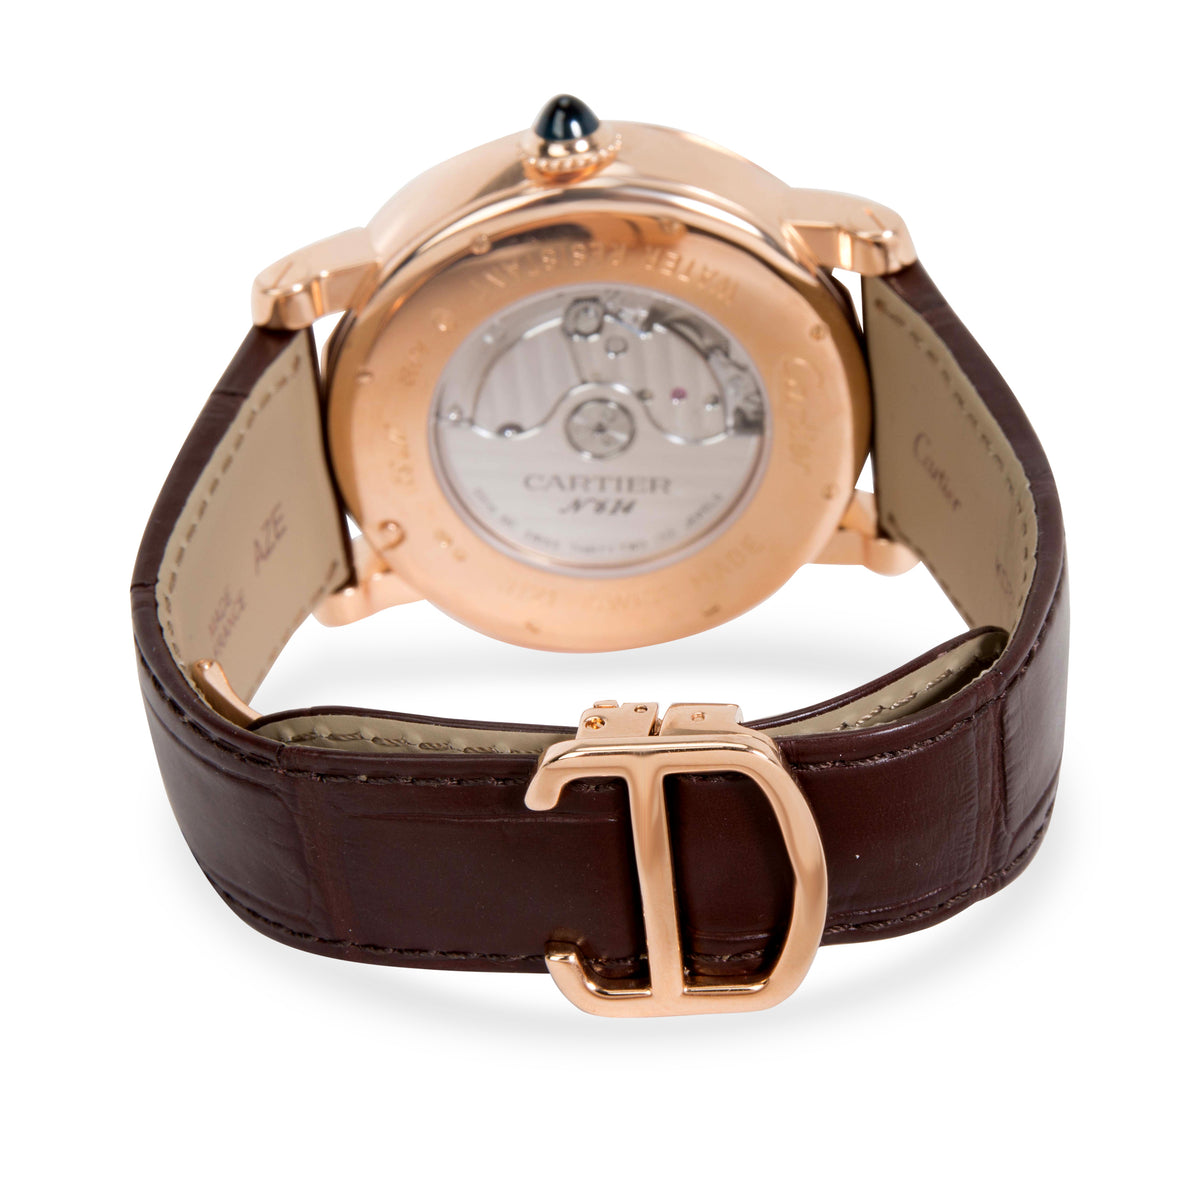 Cartier Rotonde Annual Calendar W1580001 Men's Watch in 18kt Rose Gold